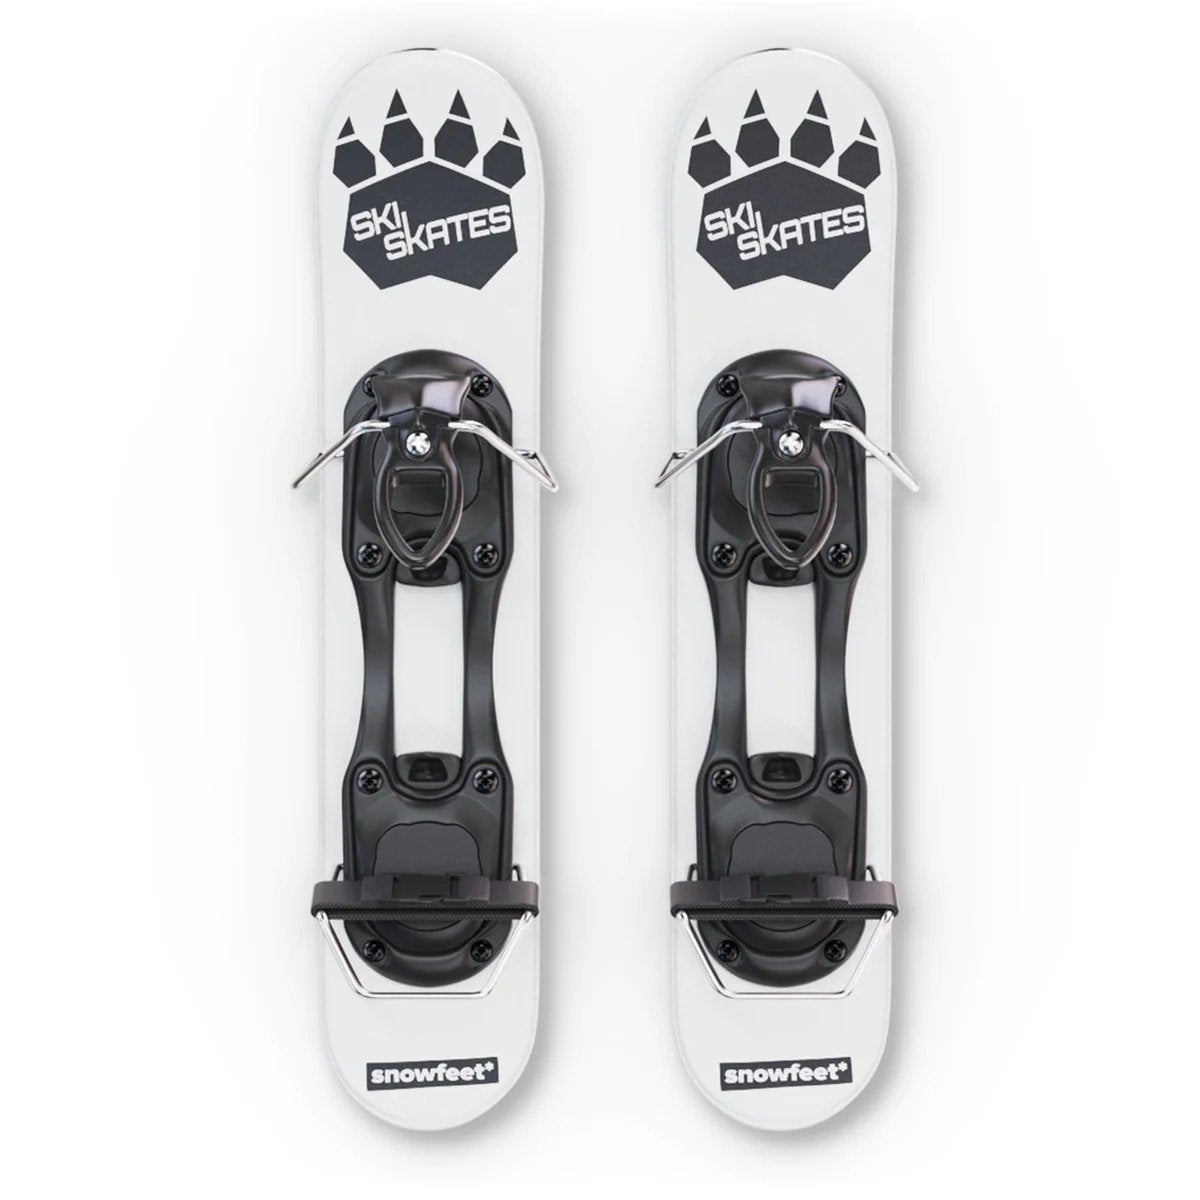 Skiskates - Mini Ski Skates | Snowboard Boots Model - Official Product